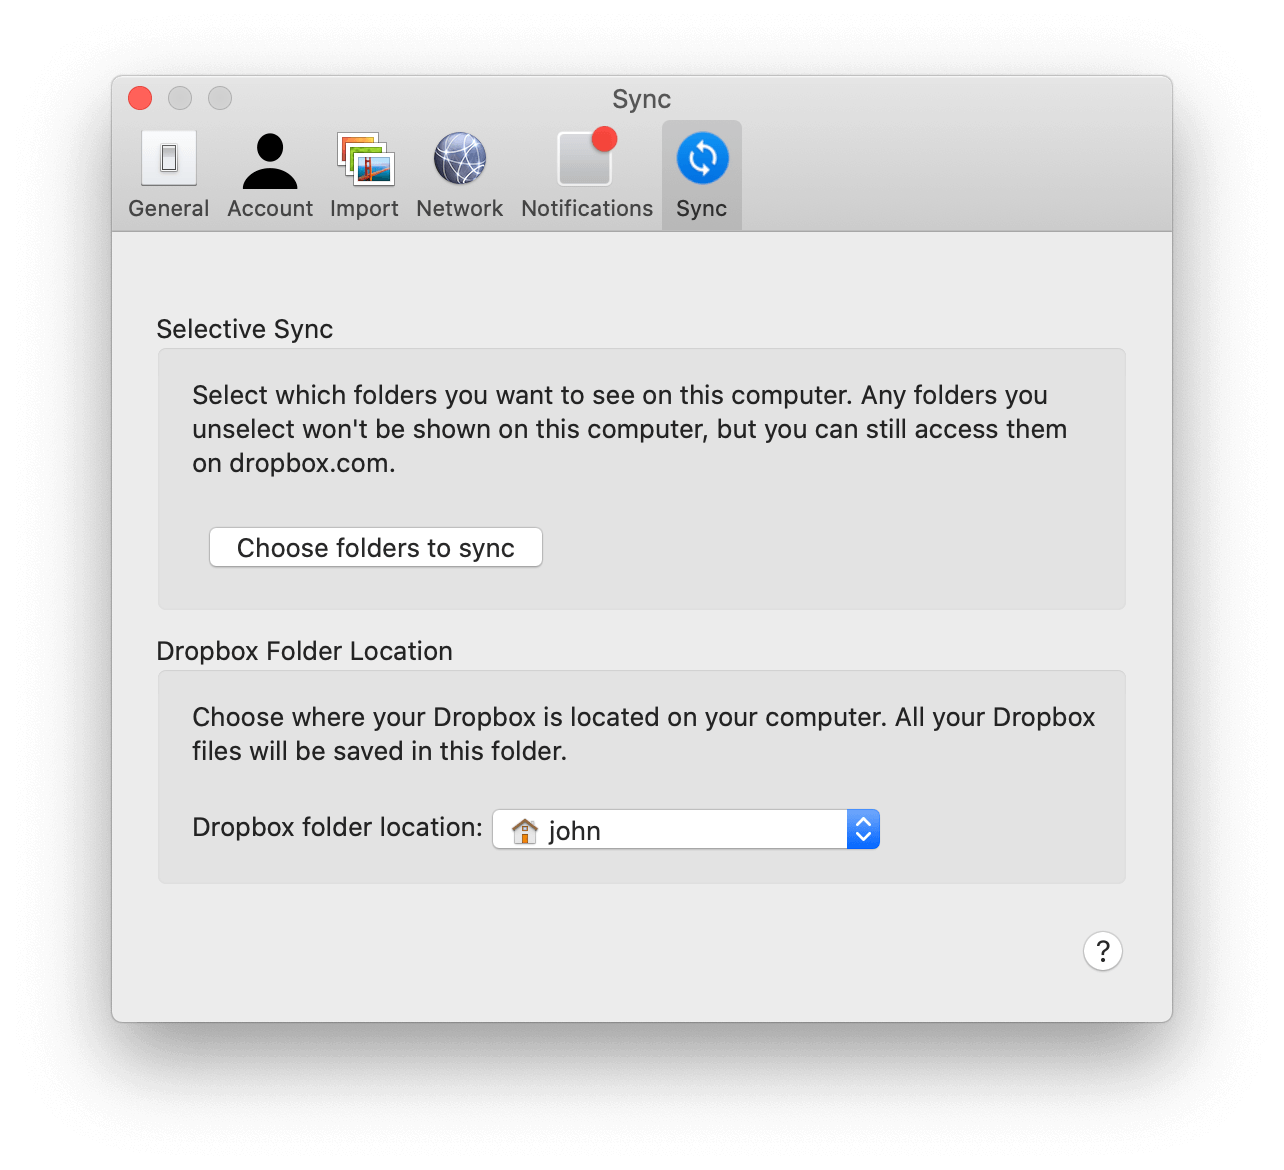 dropbox app for mac take up storage space